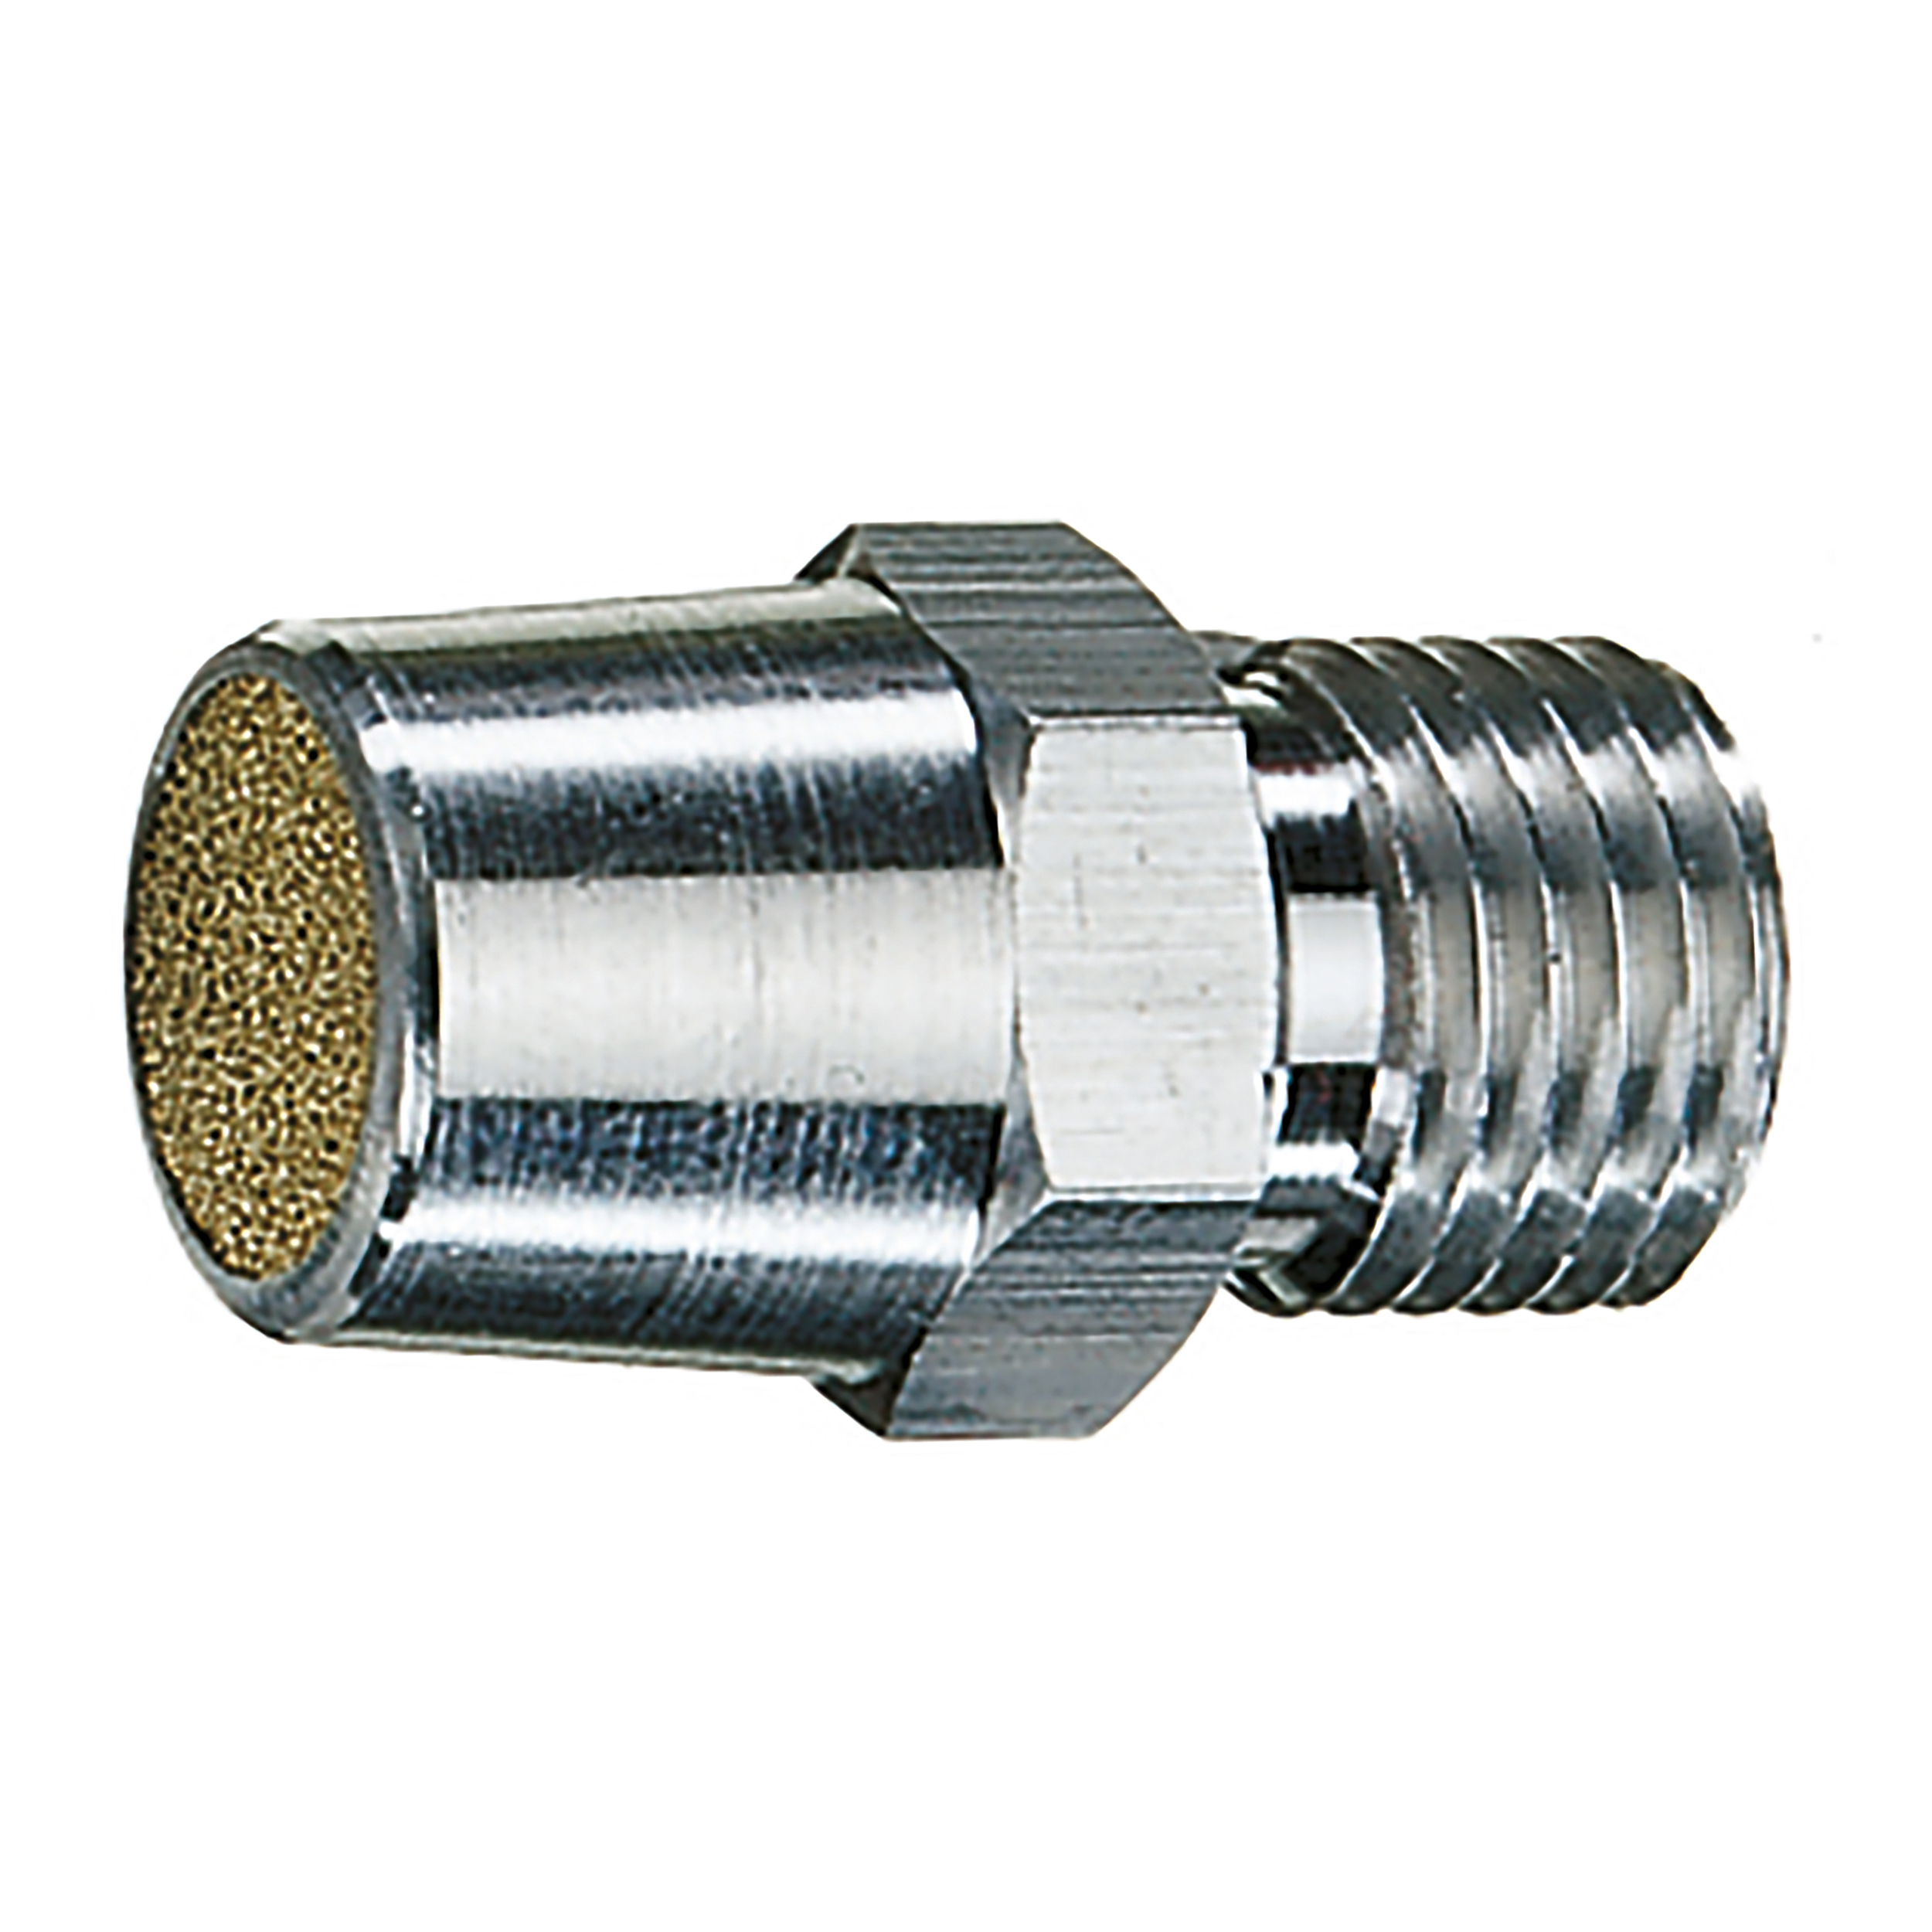 Dämpferdüse, mit Sintereinsatz, Aluminium/Sintermetall, Anschlussgewinde: M12 × 1,25, Schallpegel < 70 dB(A)